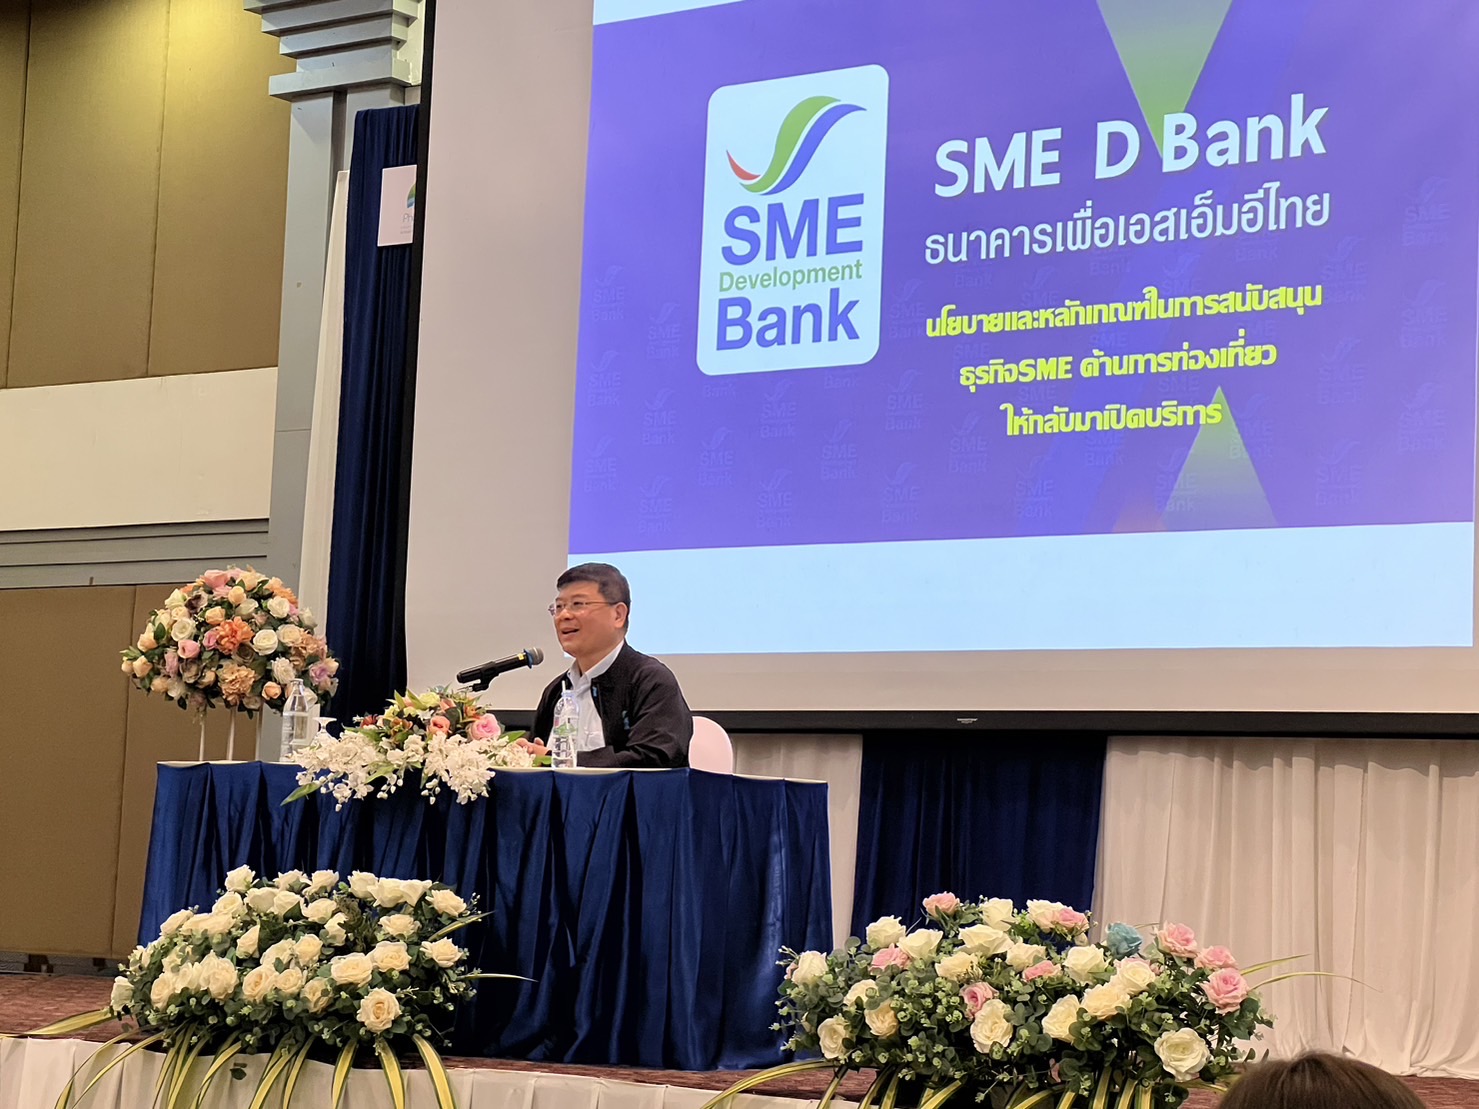 SME D BANK บรรยายพิเศษ หนุน SMEs ท่องเที่ยวภูเก็ต